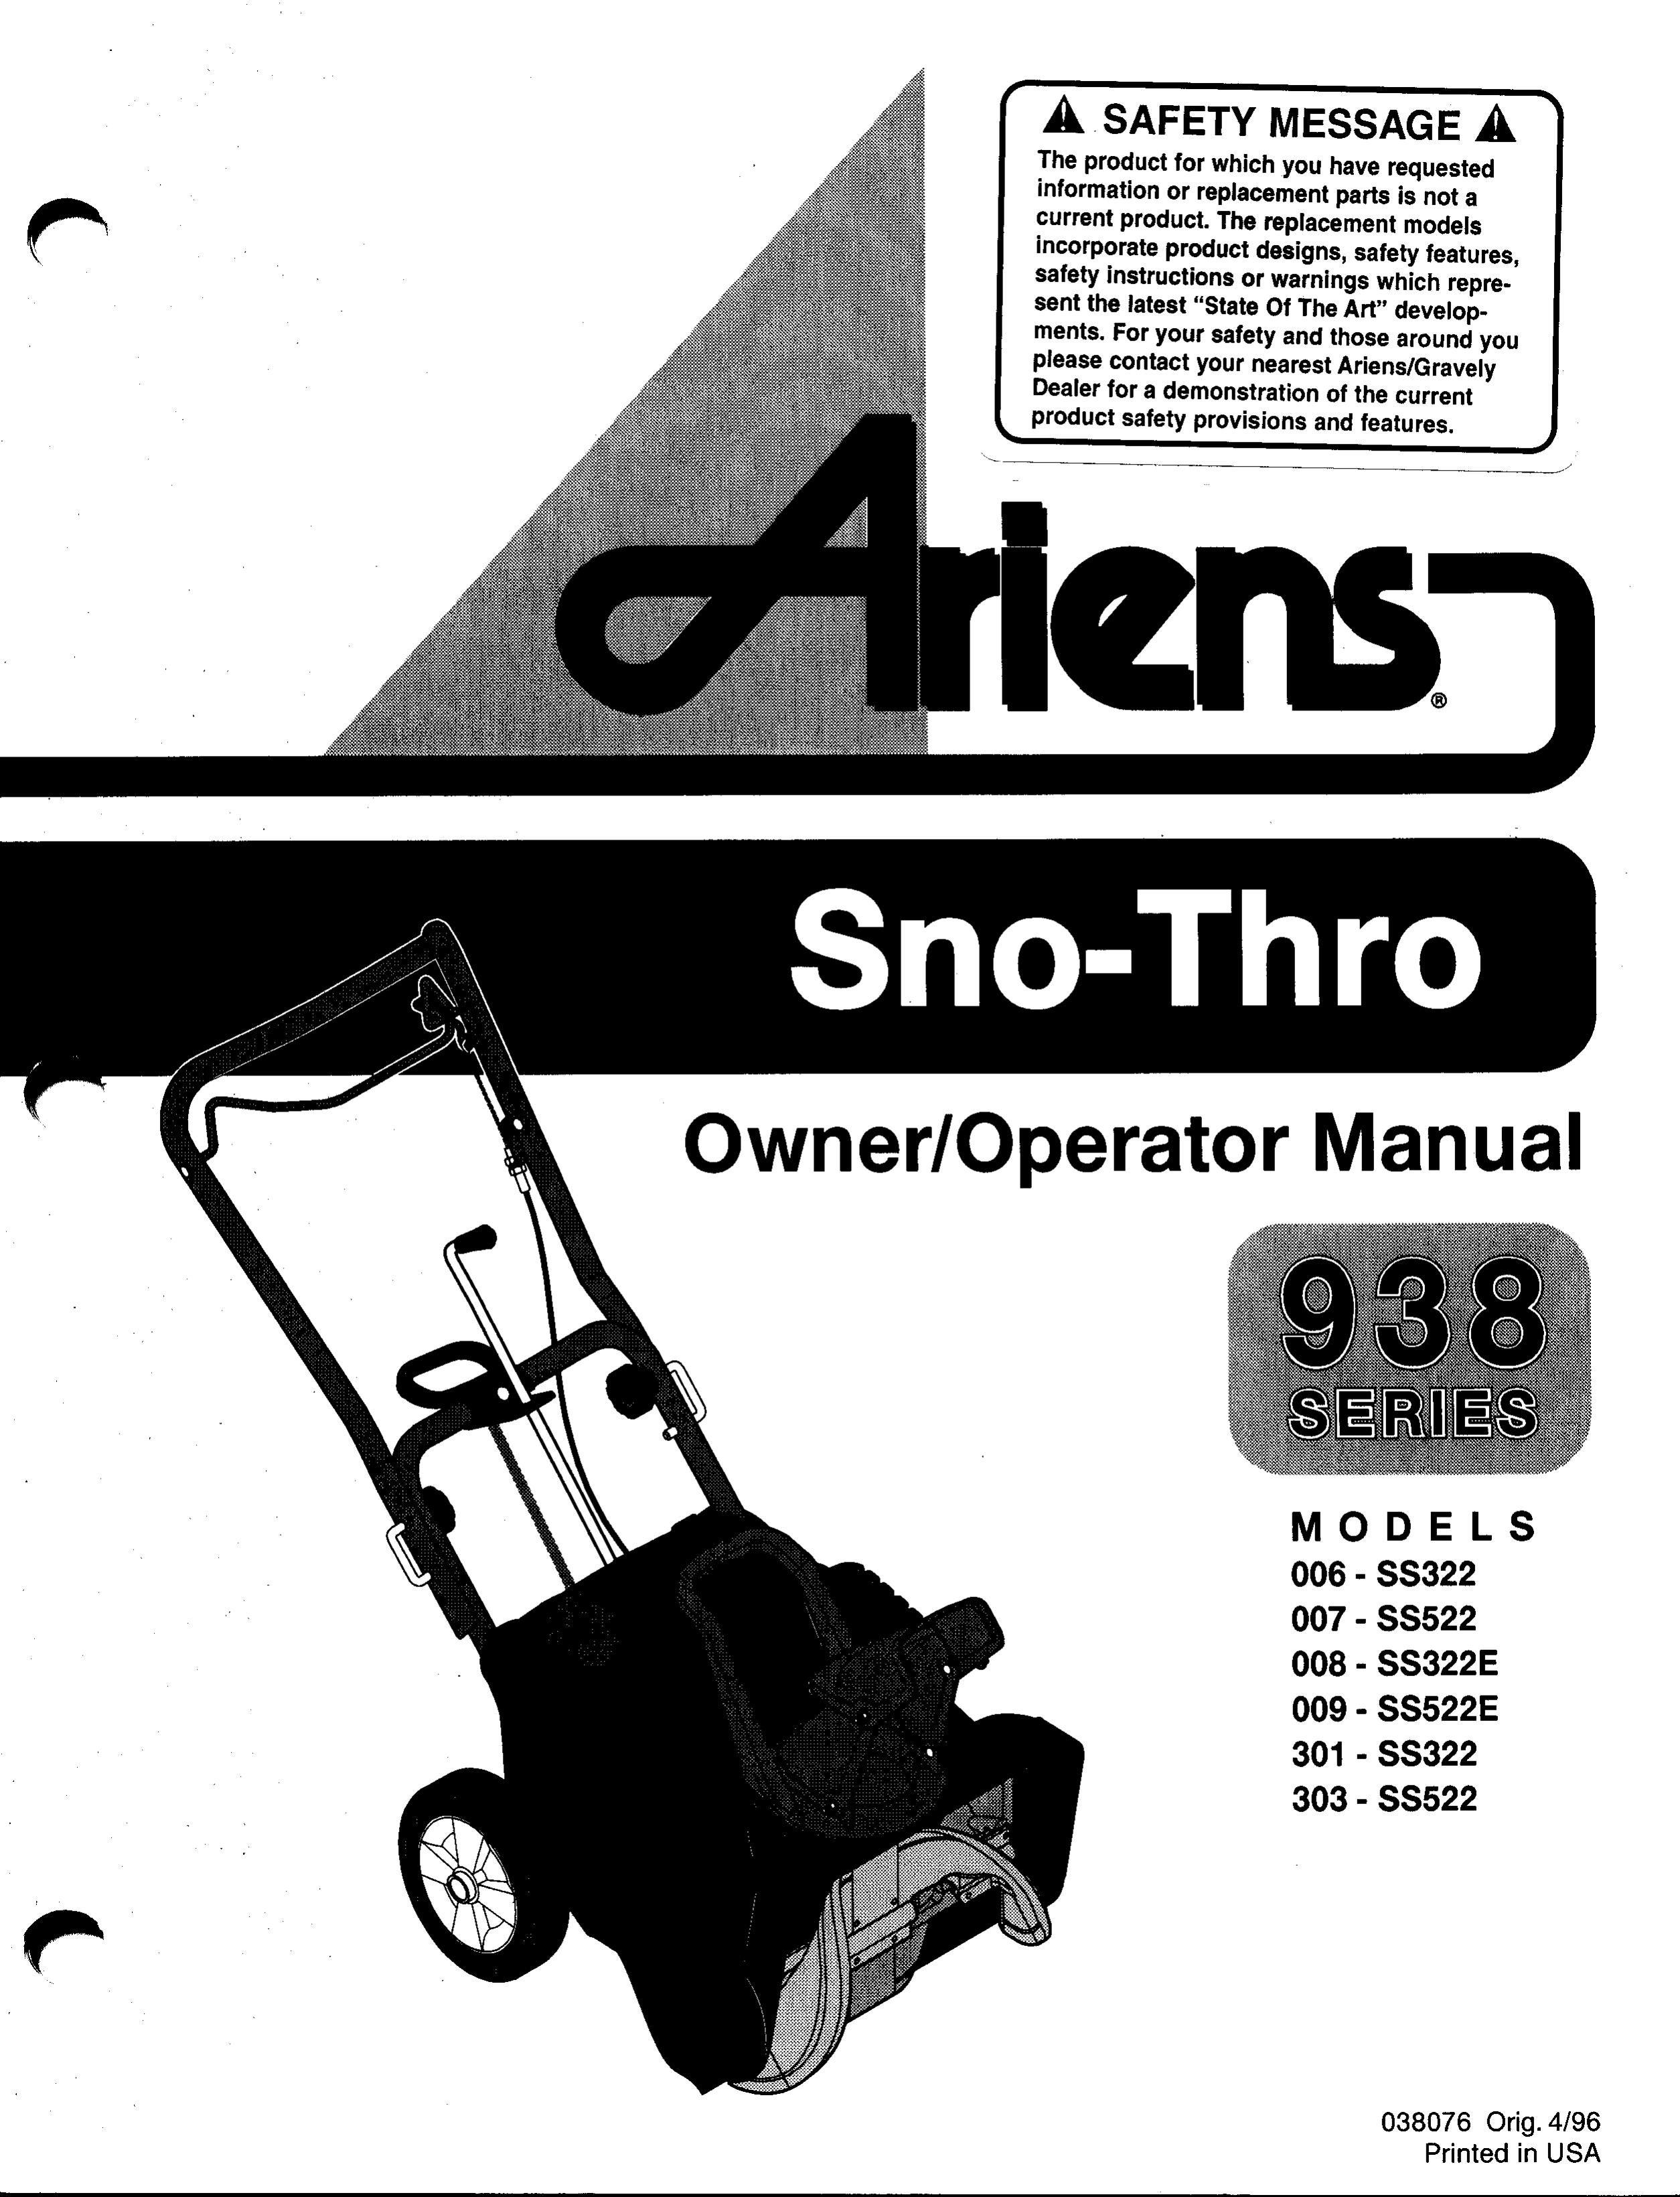 Ariens 303-SS522 Snow Blower User Manual